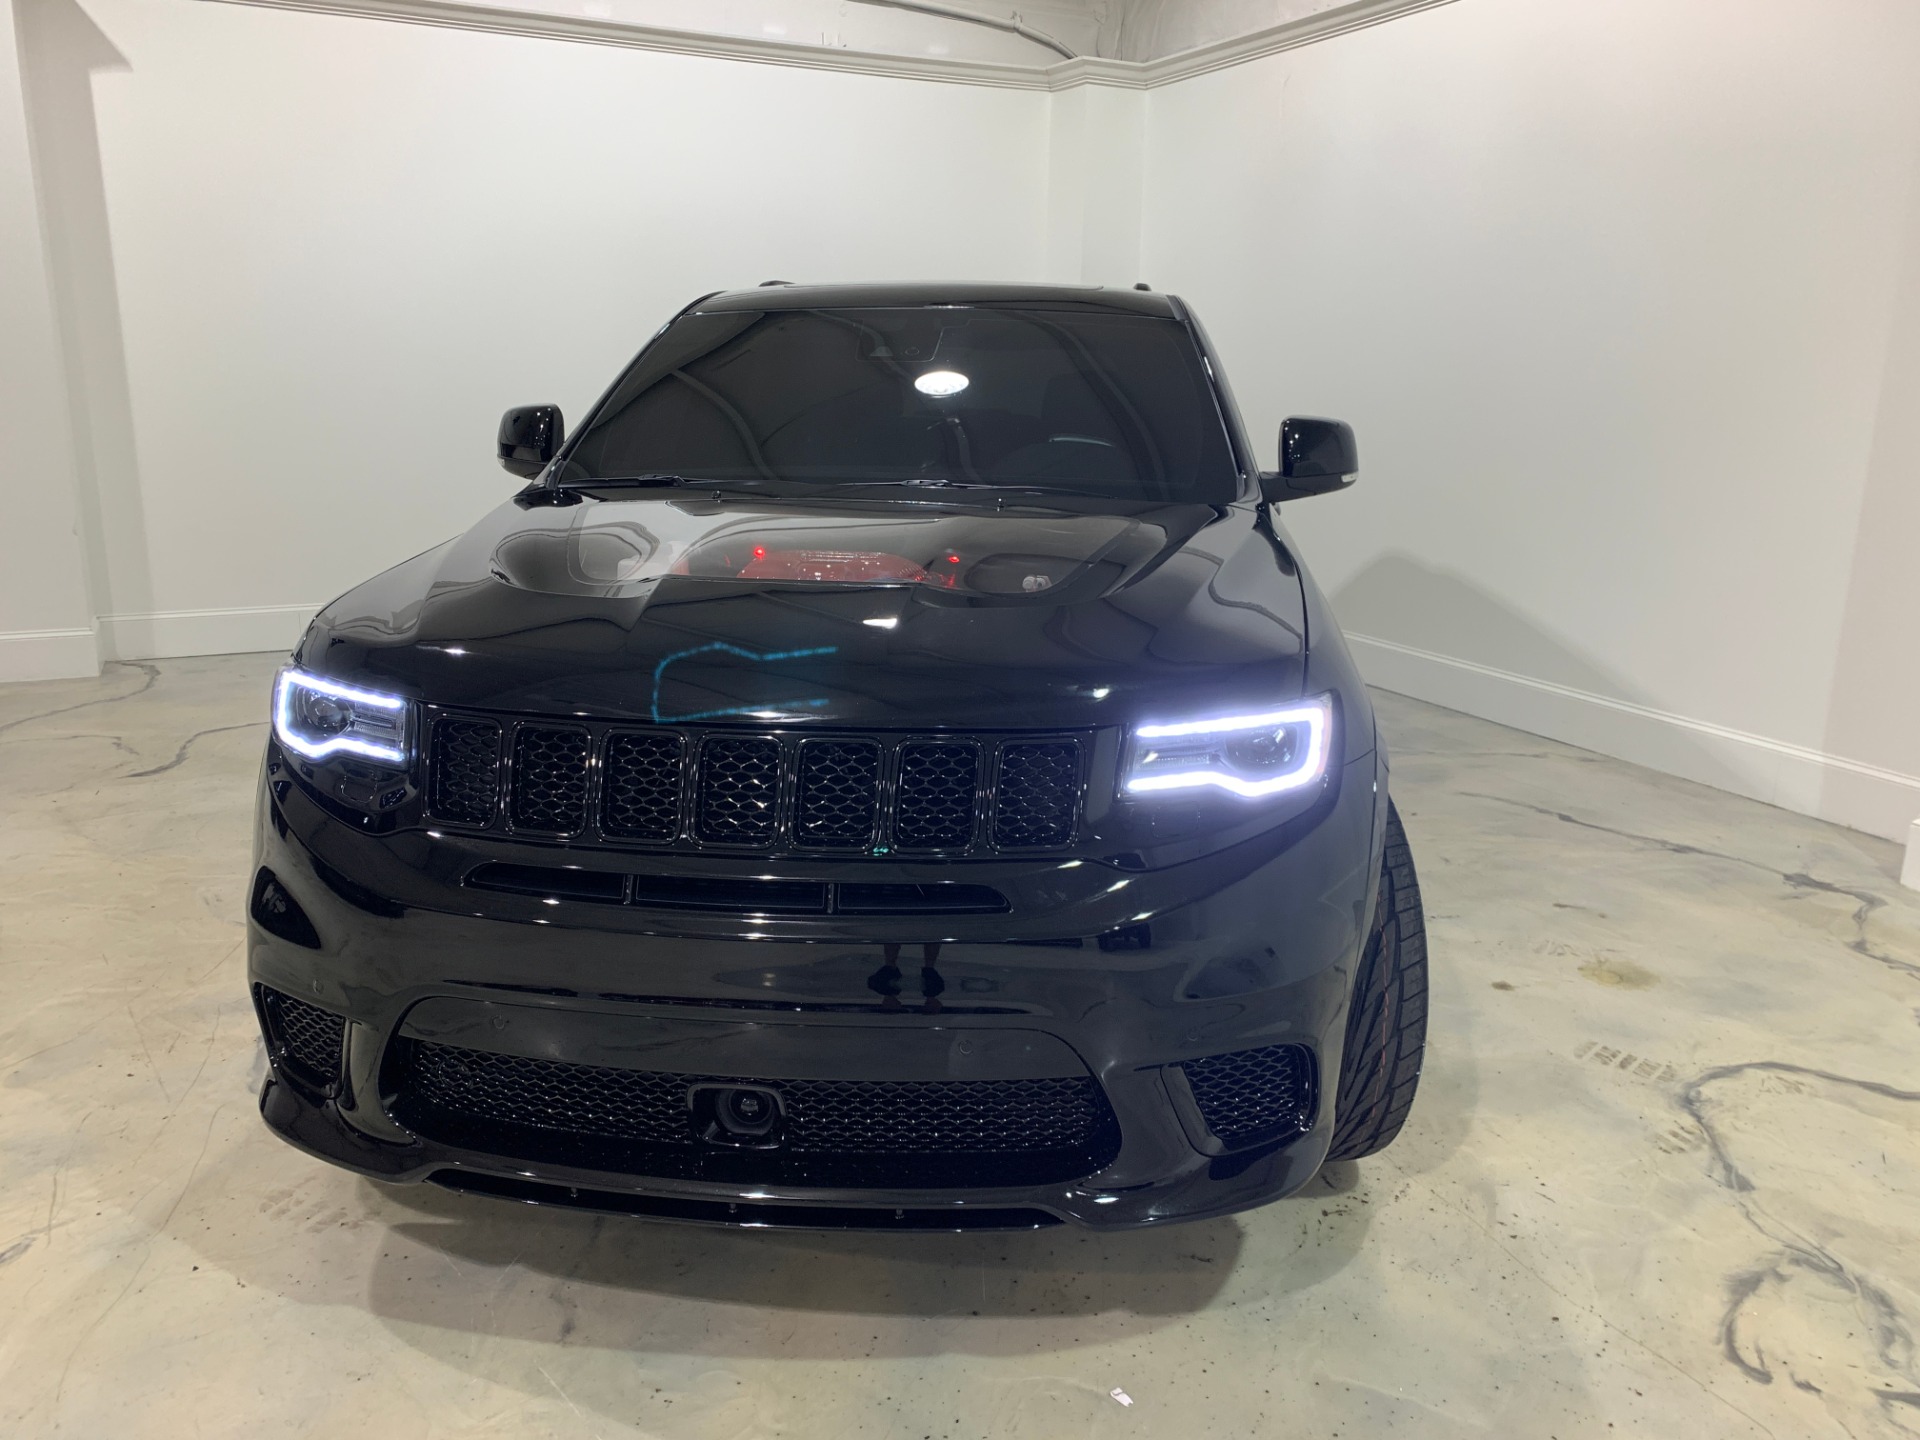 2018 Jeep Grand Cherokee | Fusion Luxury Motors